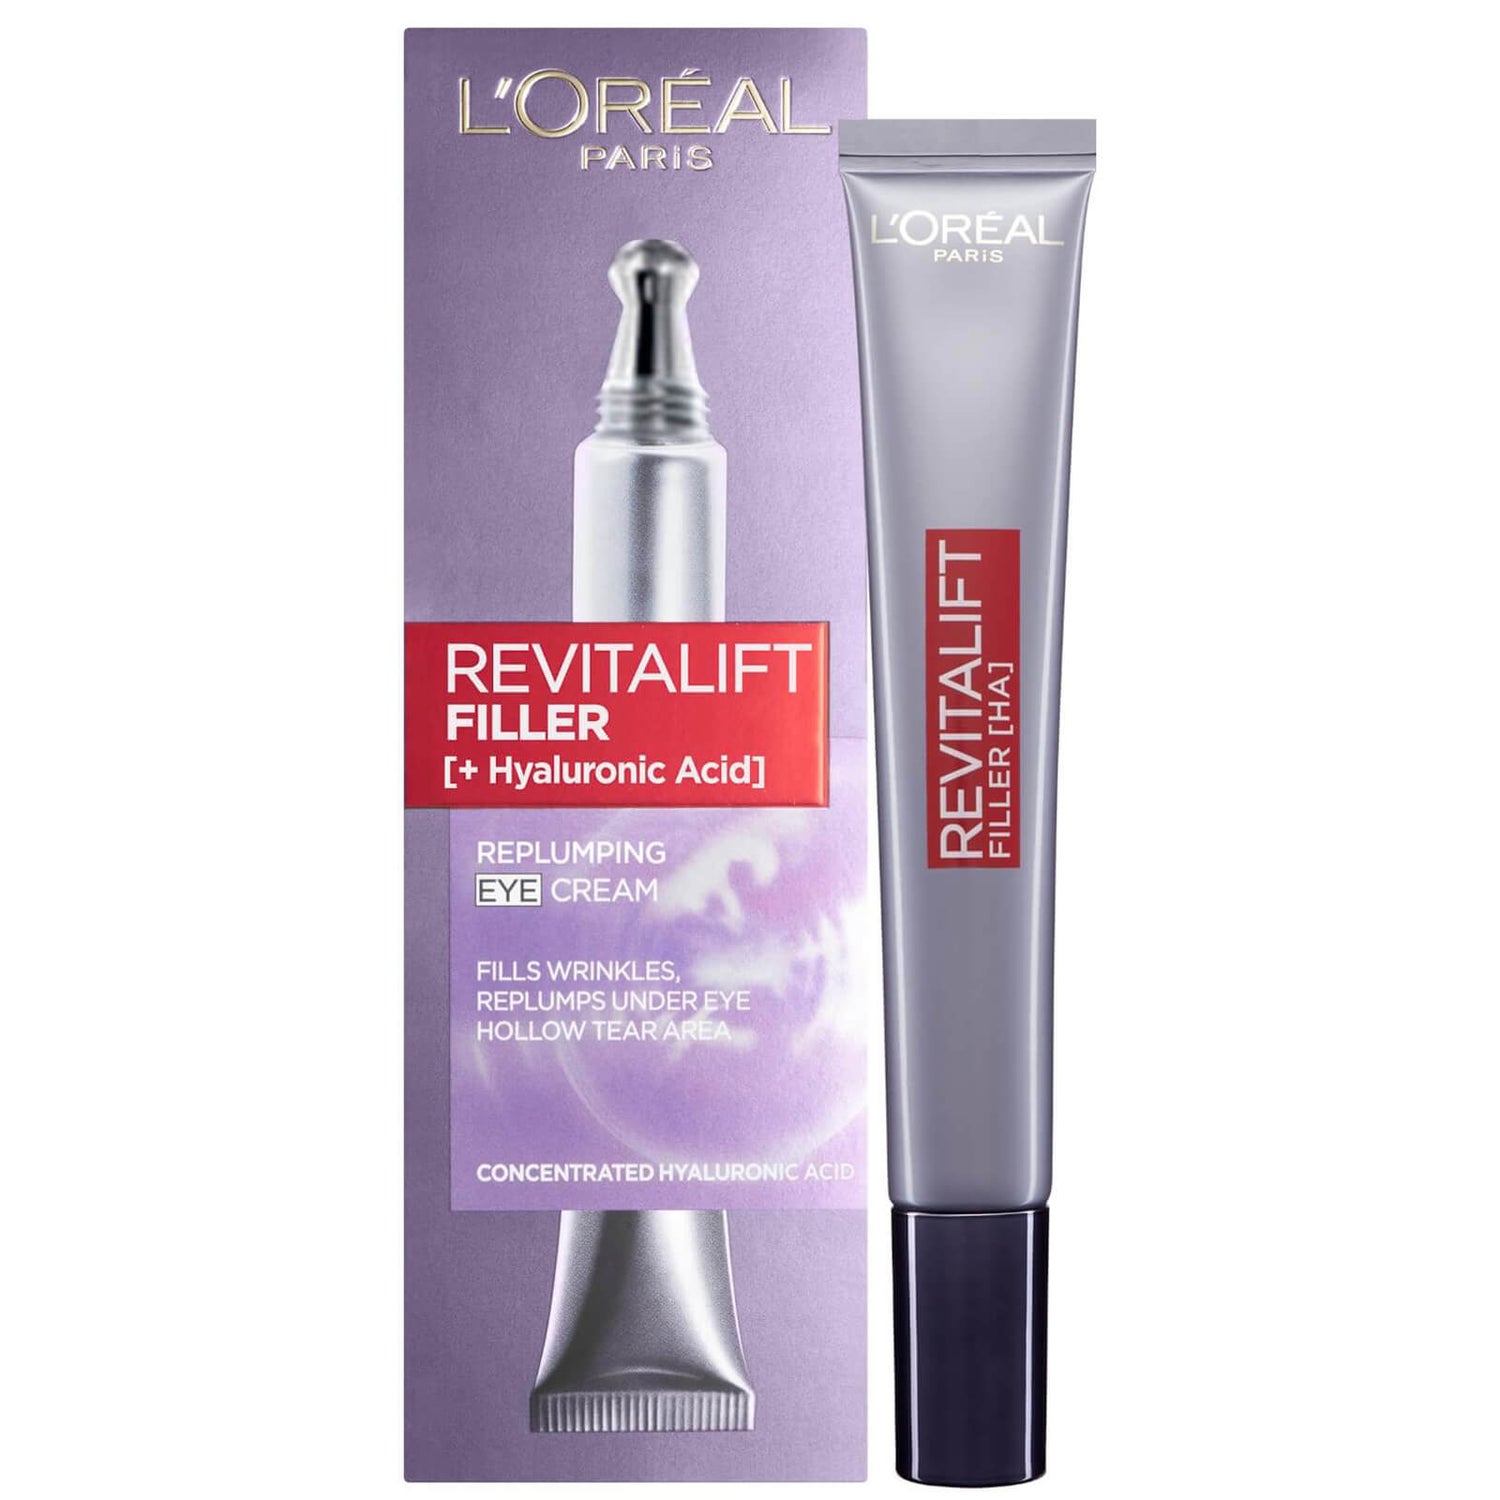 Crema de ojos Revitalift Filler Renew Eye Cream de L'Oréal Paris